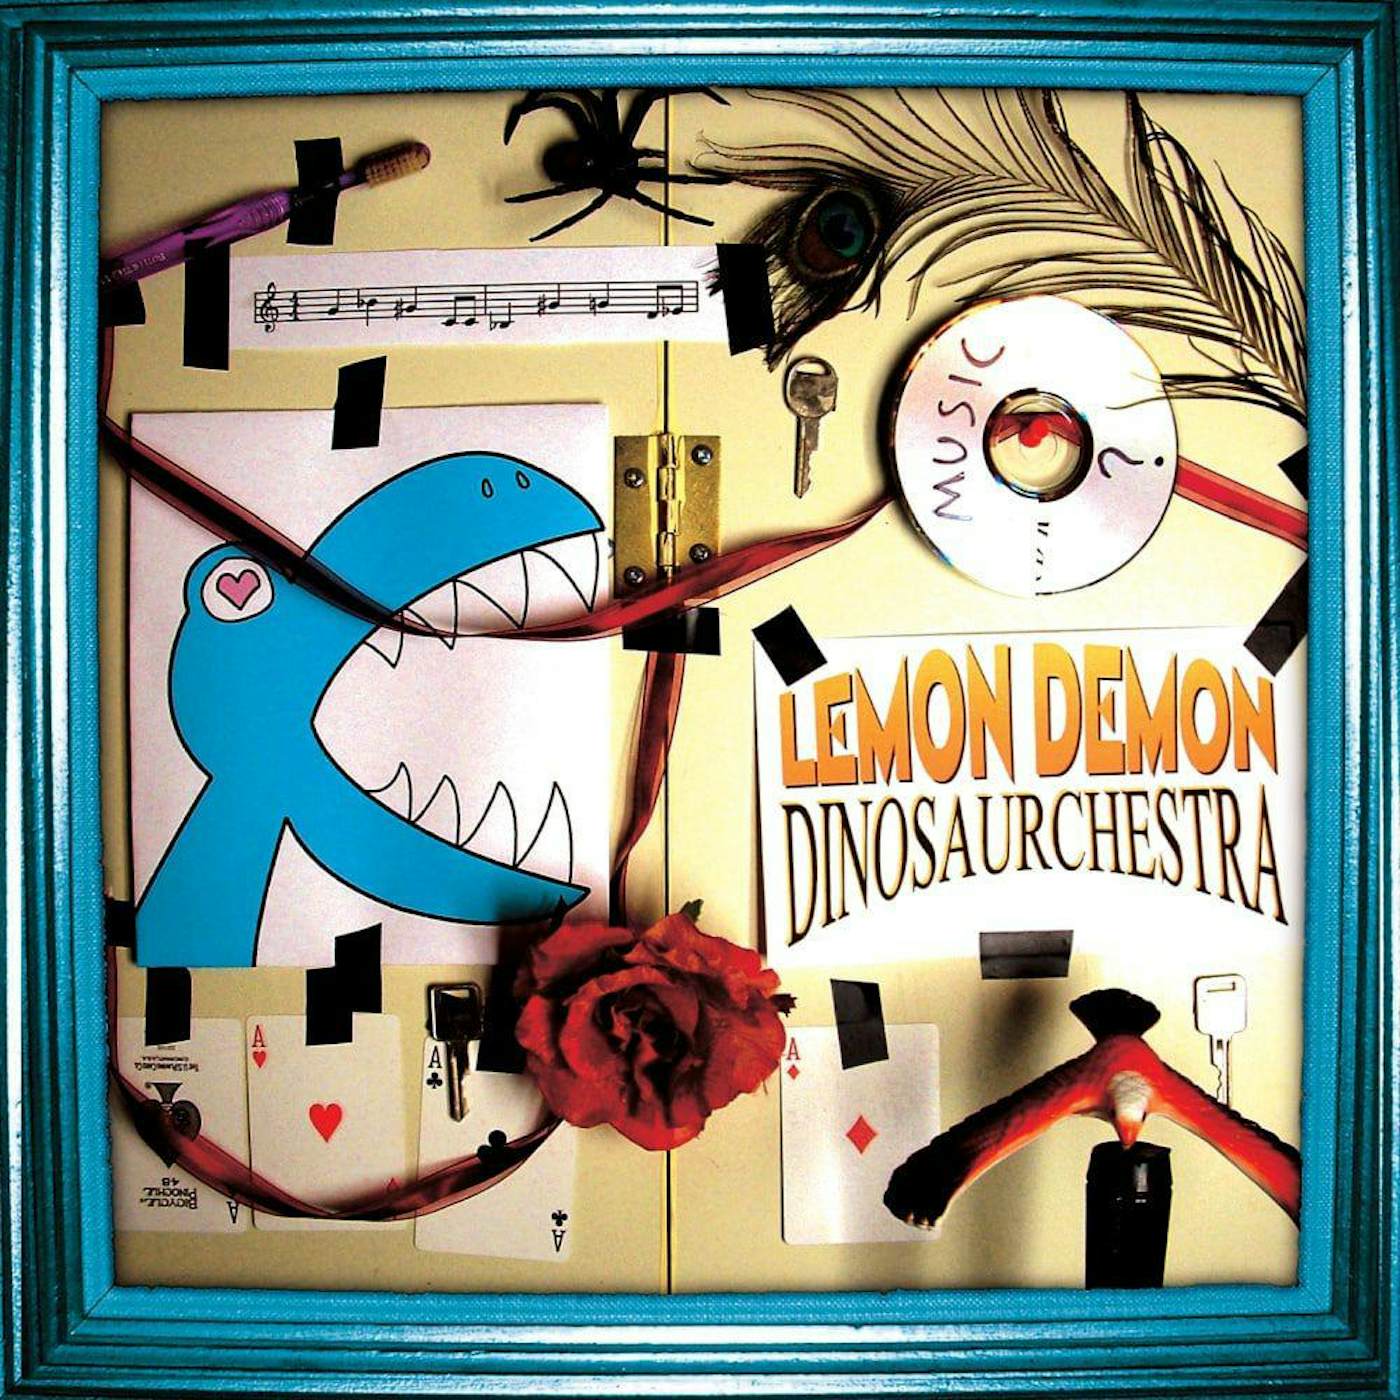 Lemon Demon Dinosaurchestra Vinyl Record